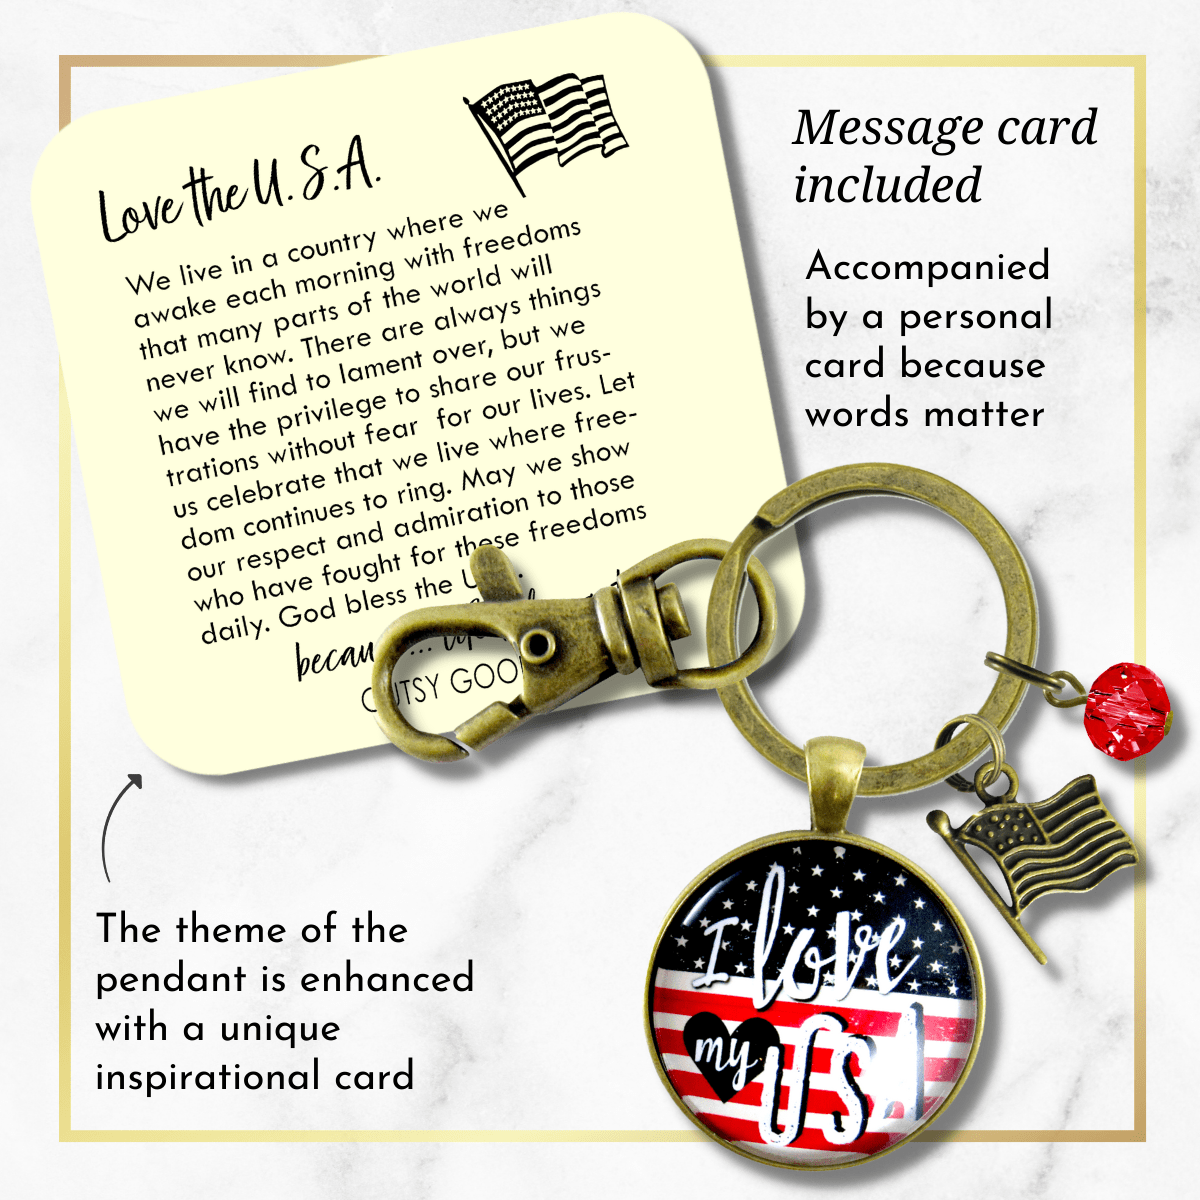 American Flag Keychain I Love My USA Patriotic Vintage Bronze Style Key Chain Charm - Gutsy Goodness